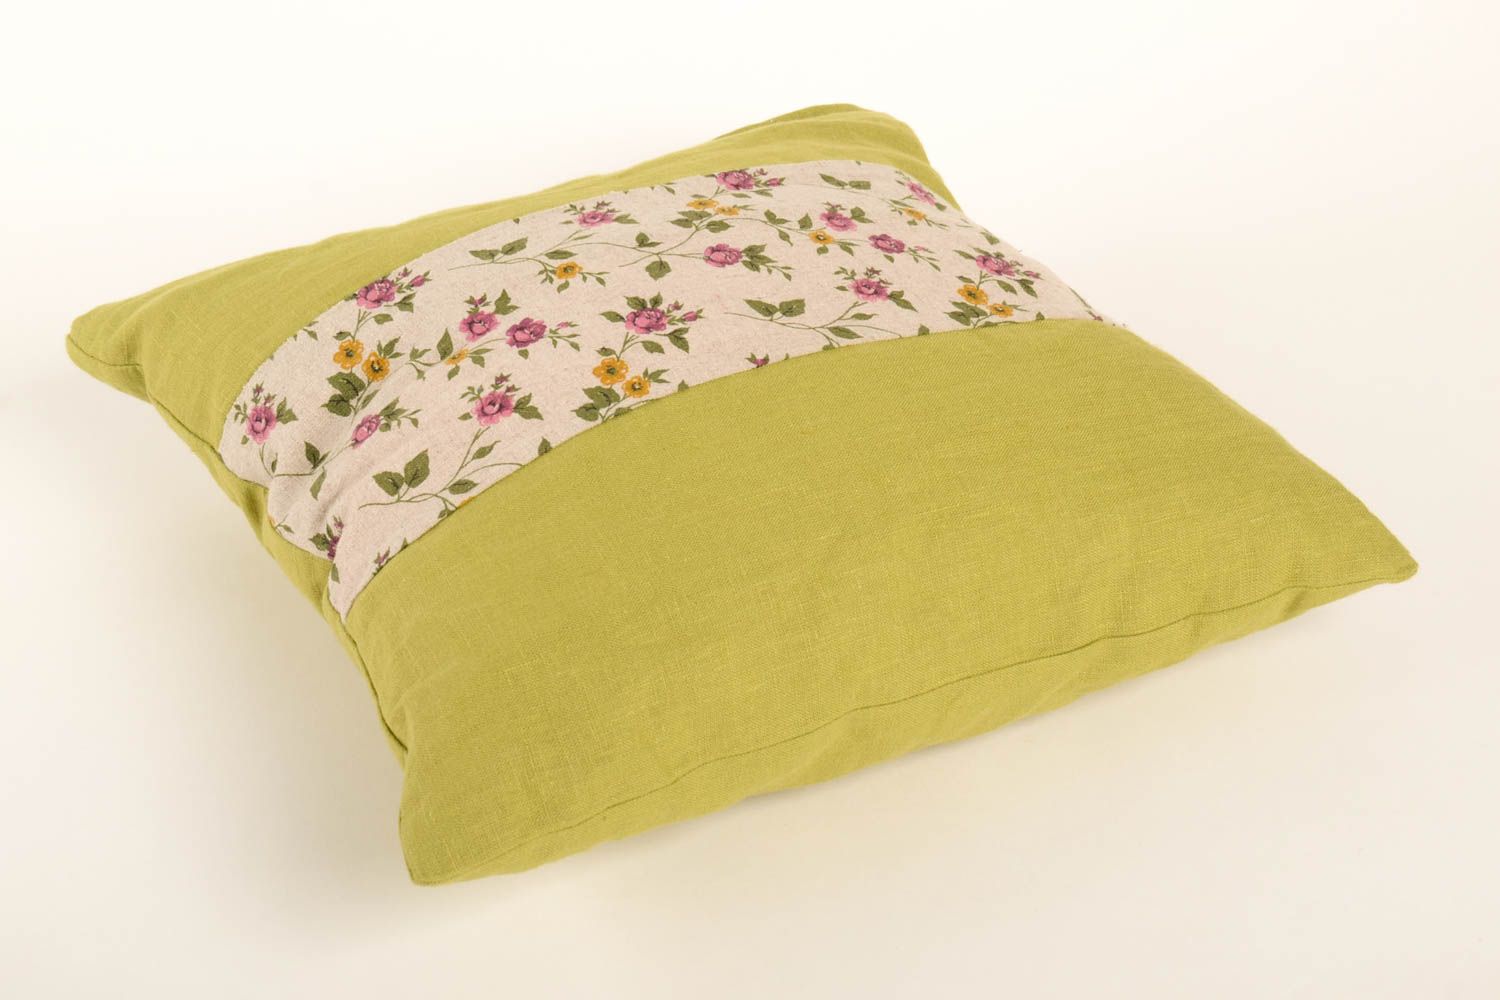 Homemade home decor designer pillow accent pillow for bed decorative pillow photo 4